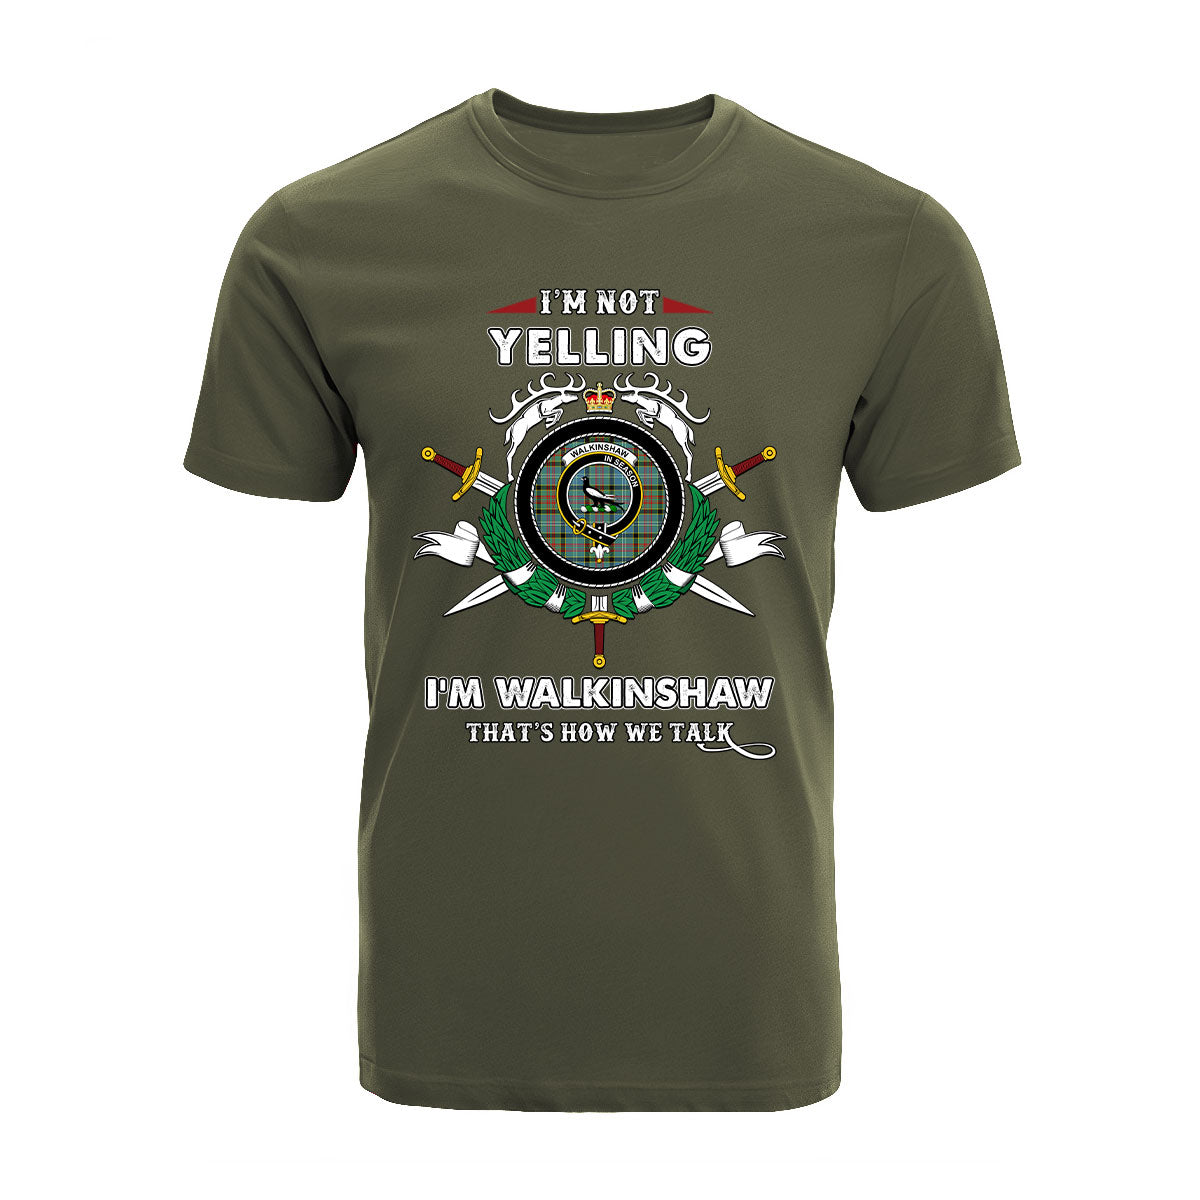 Walkinshaw Tartan Crest T-shirt - I'm not yelling style